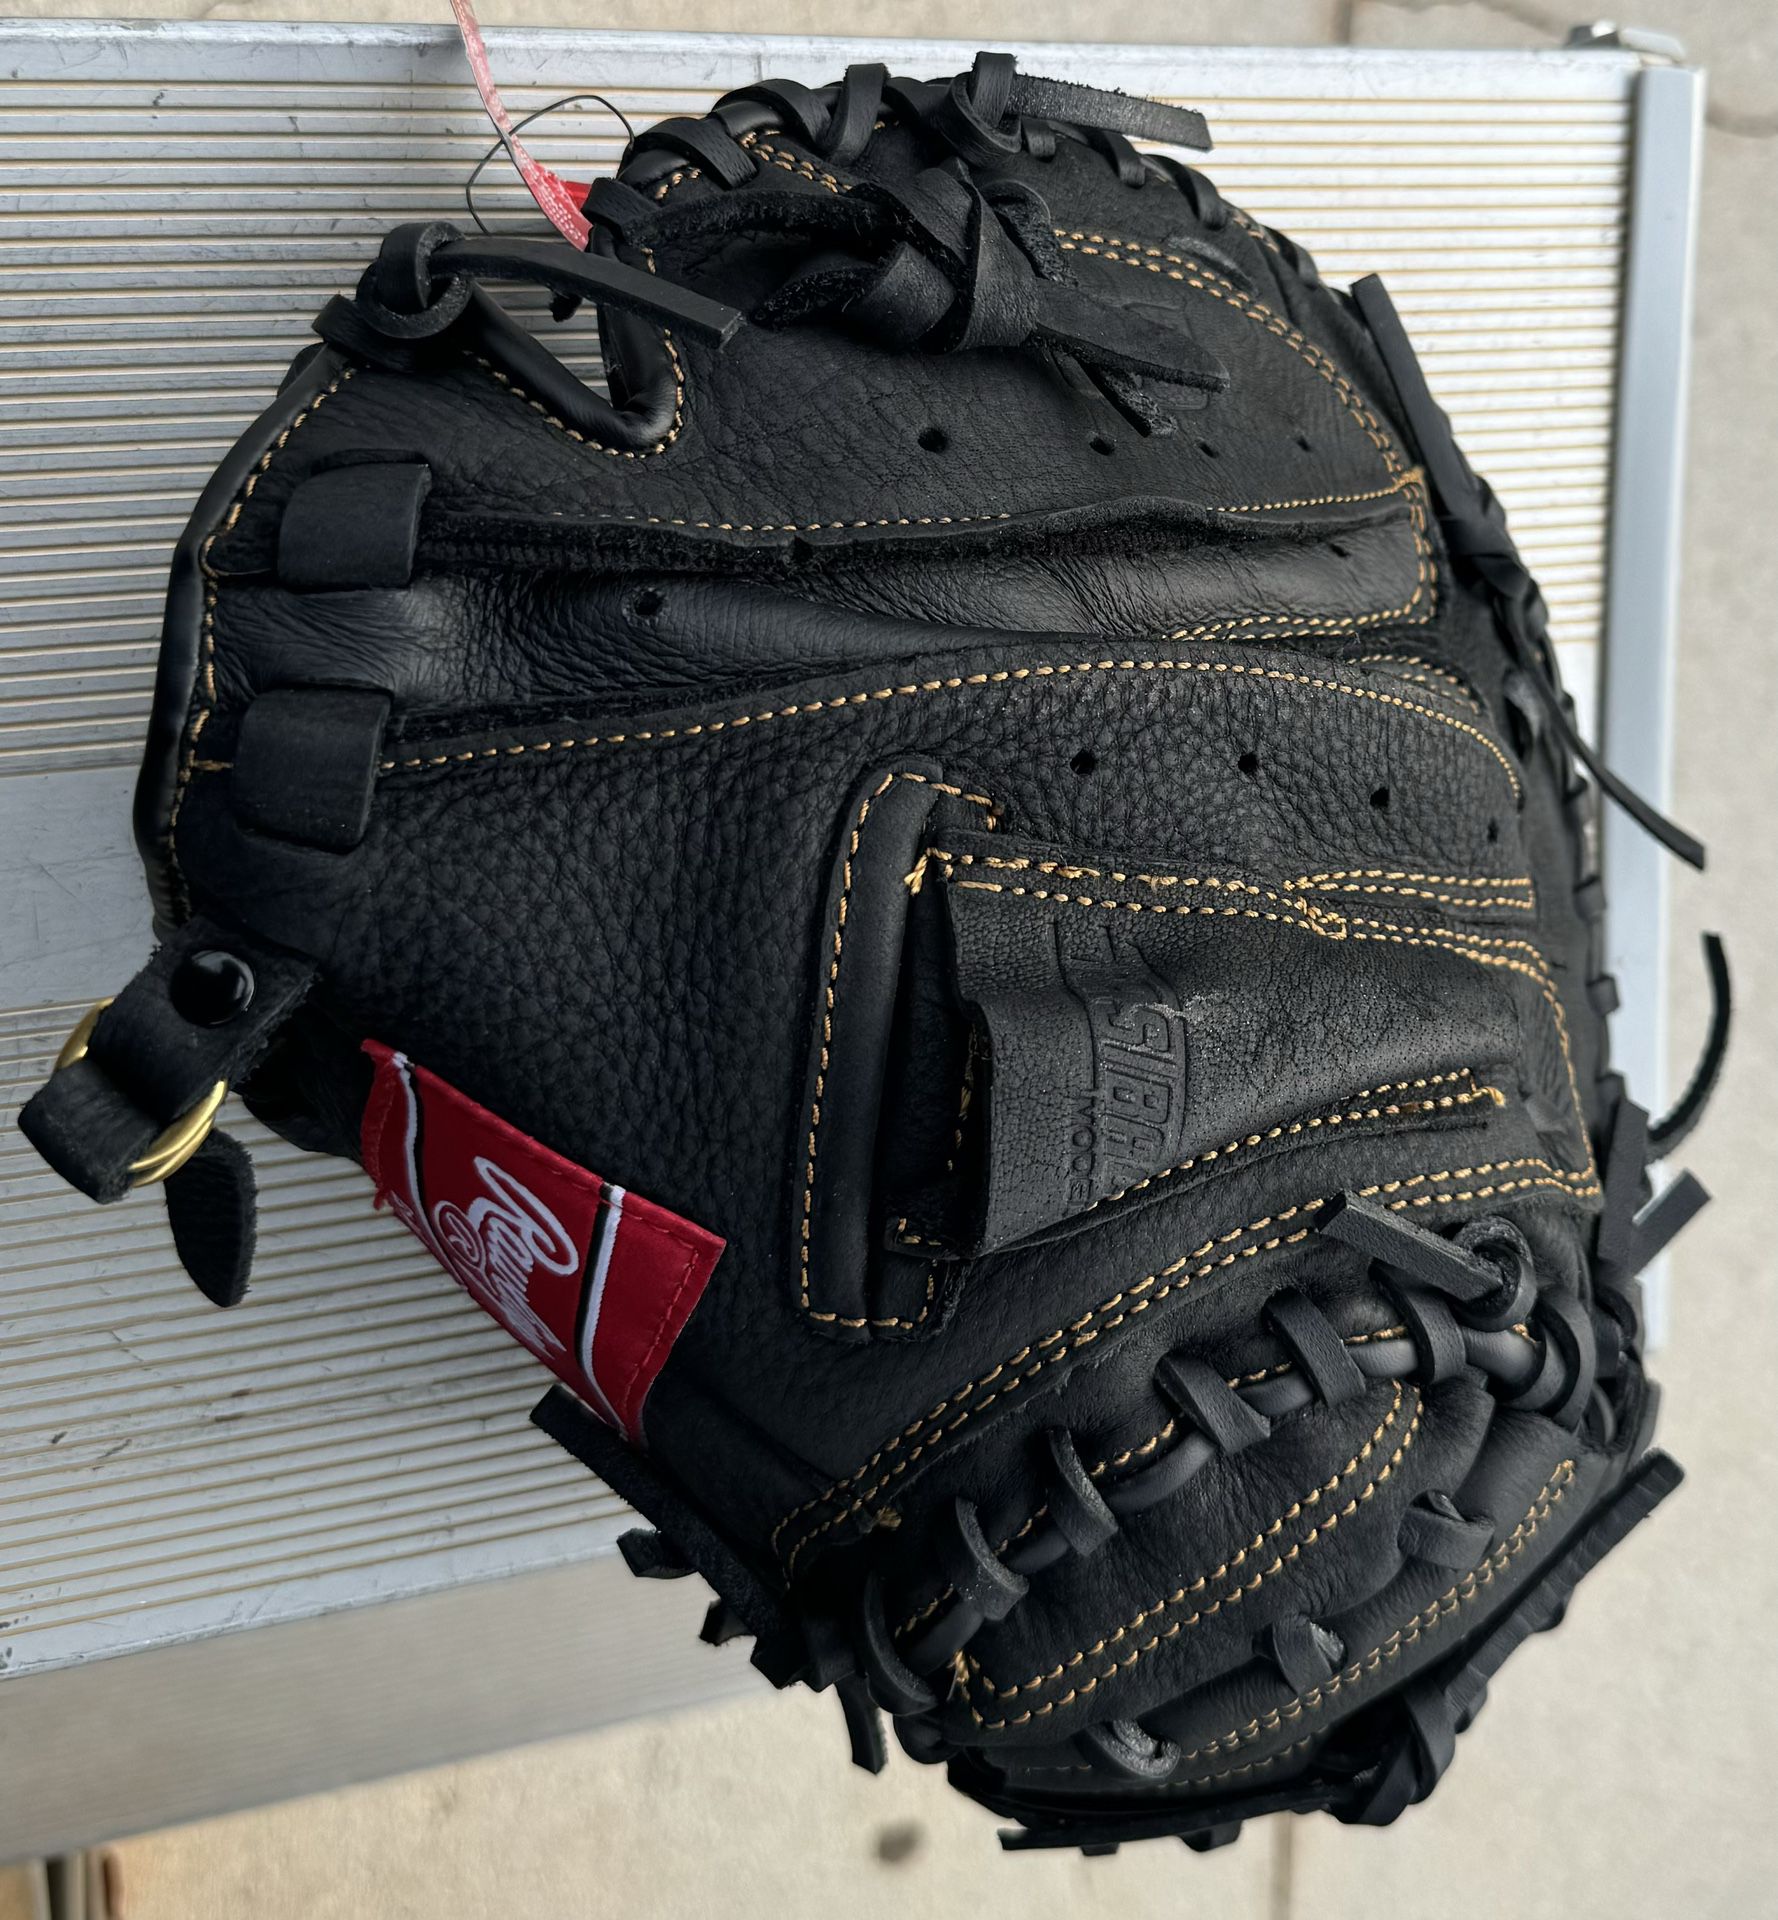 Rawlings Renegade Baseball Glove